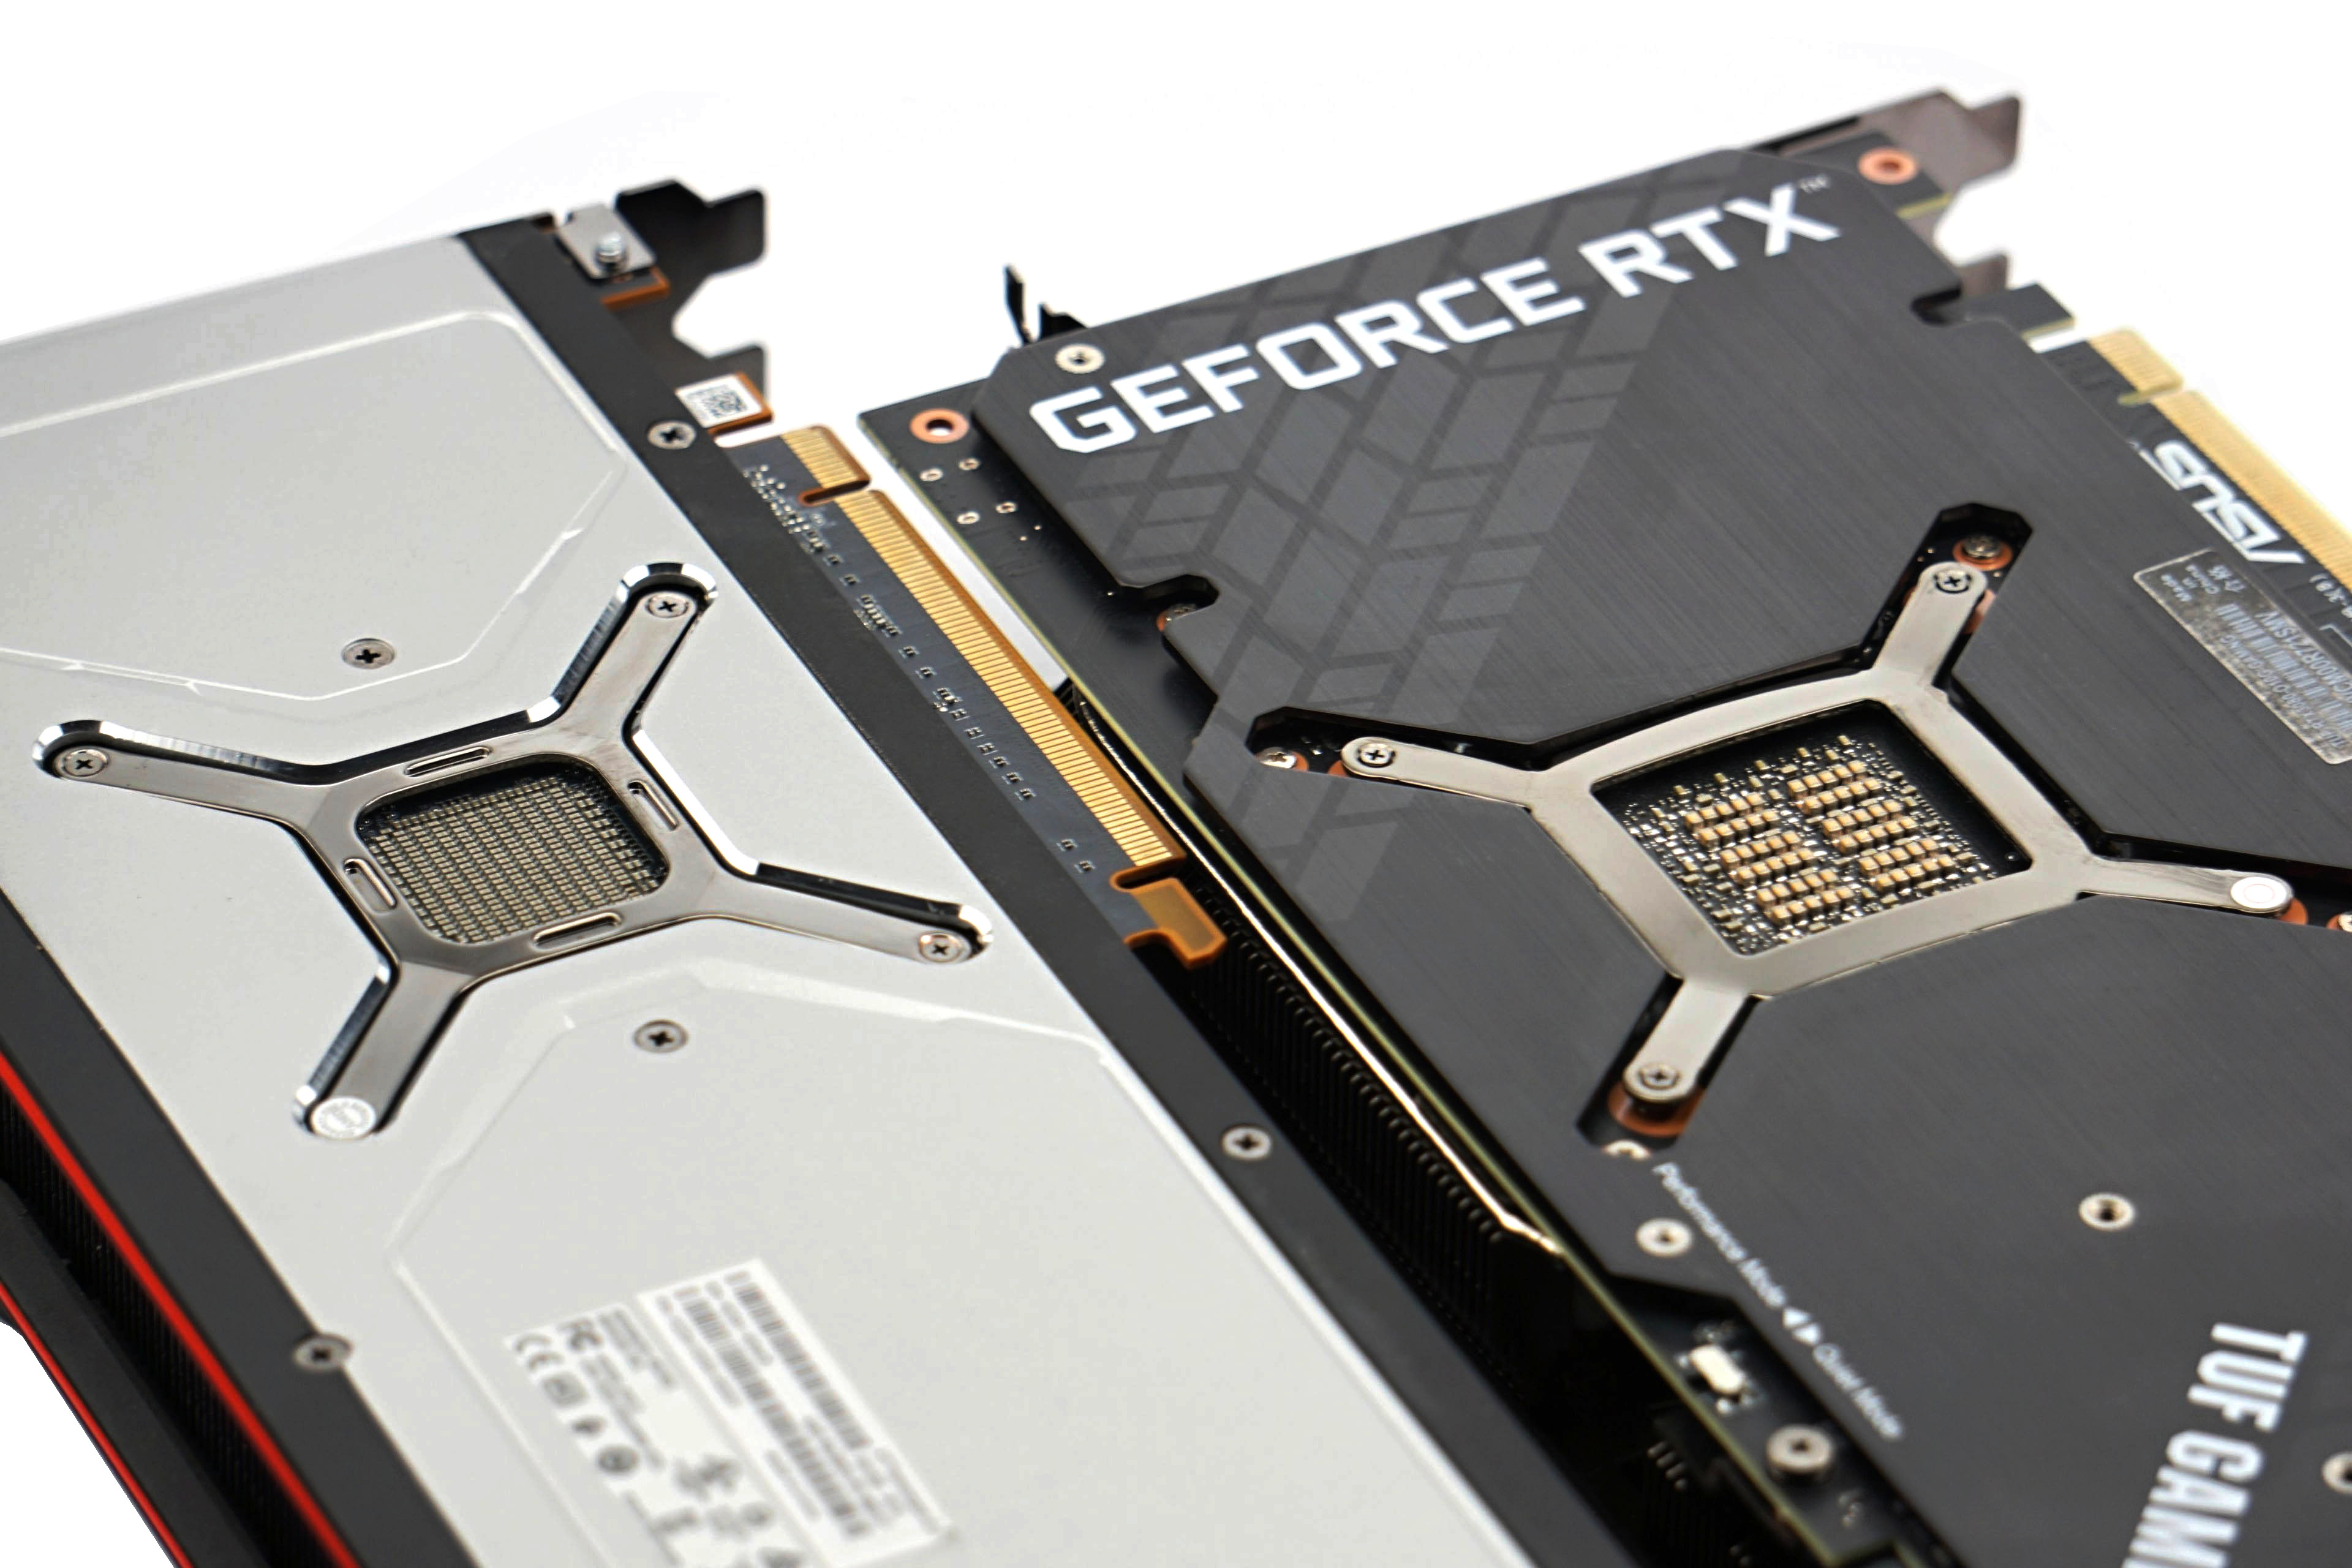 AMD Radeon RX 6800 XT vs NVIDIA GeForce RTX 3080 Founders Edition